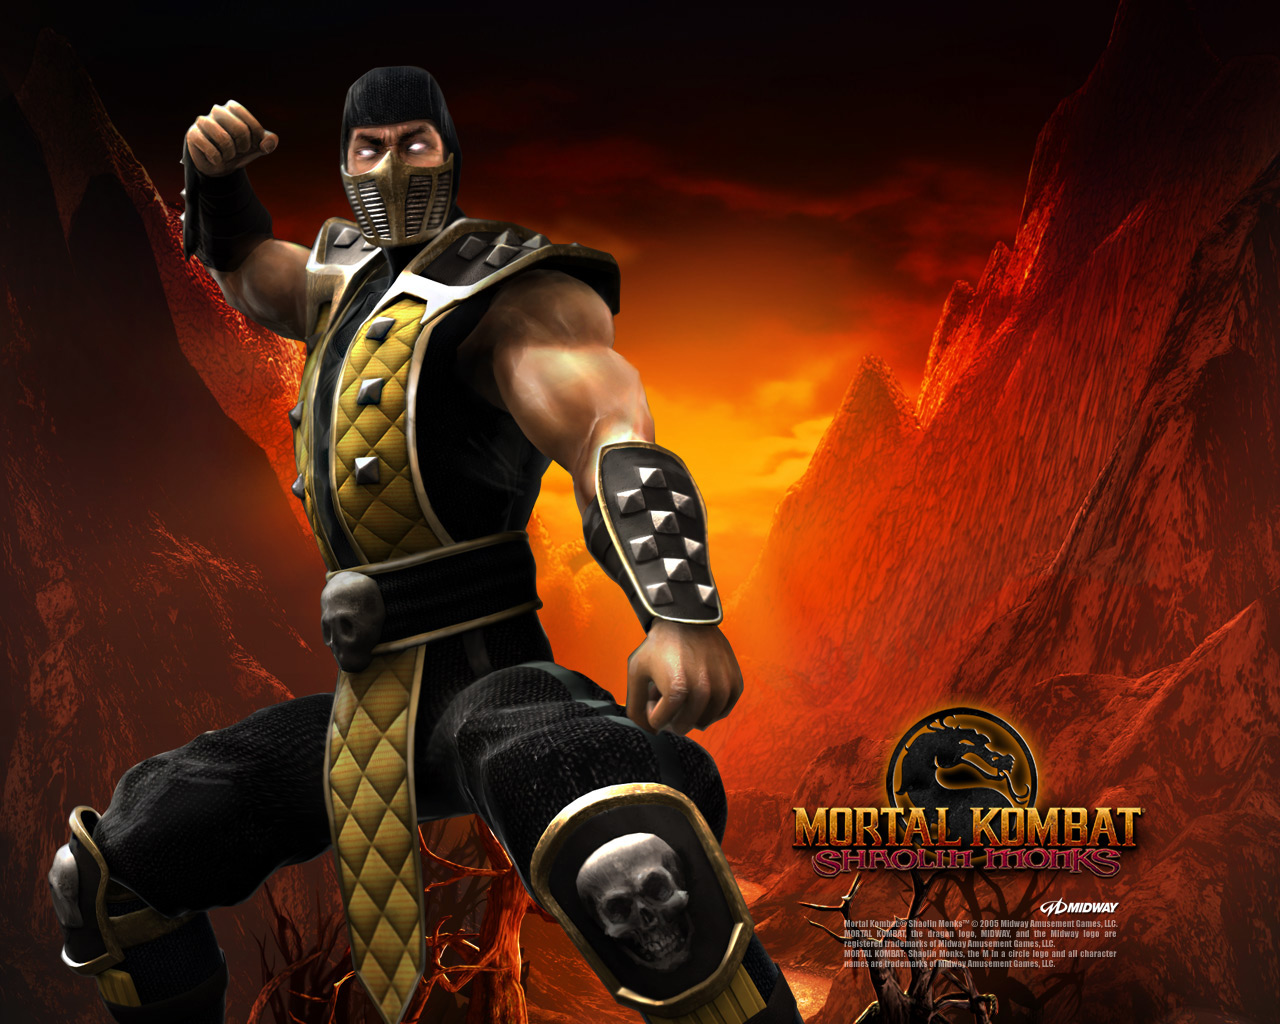 Download full size Mortal Kombat wallpaper / Games / 1280x1024